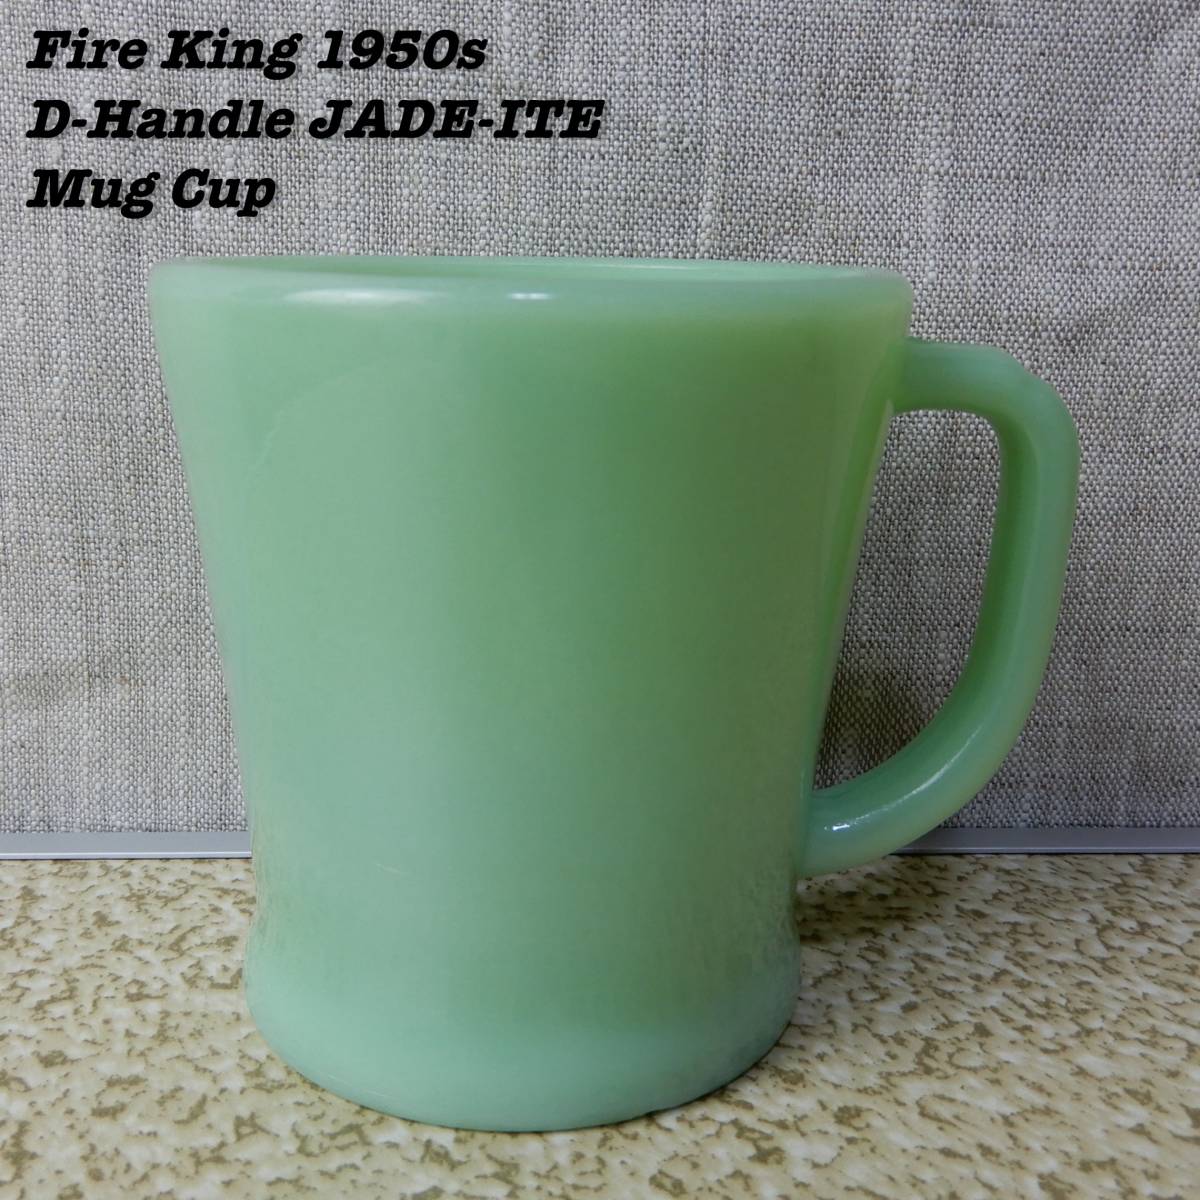 Fire King JADE-ITE D-Handle Mug Cup 1952s-1955s Flat Bottom ③ Vintage ファイヤーキング ジュダイ フラットボトム ヴィンテージの画像1